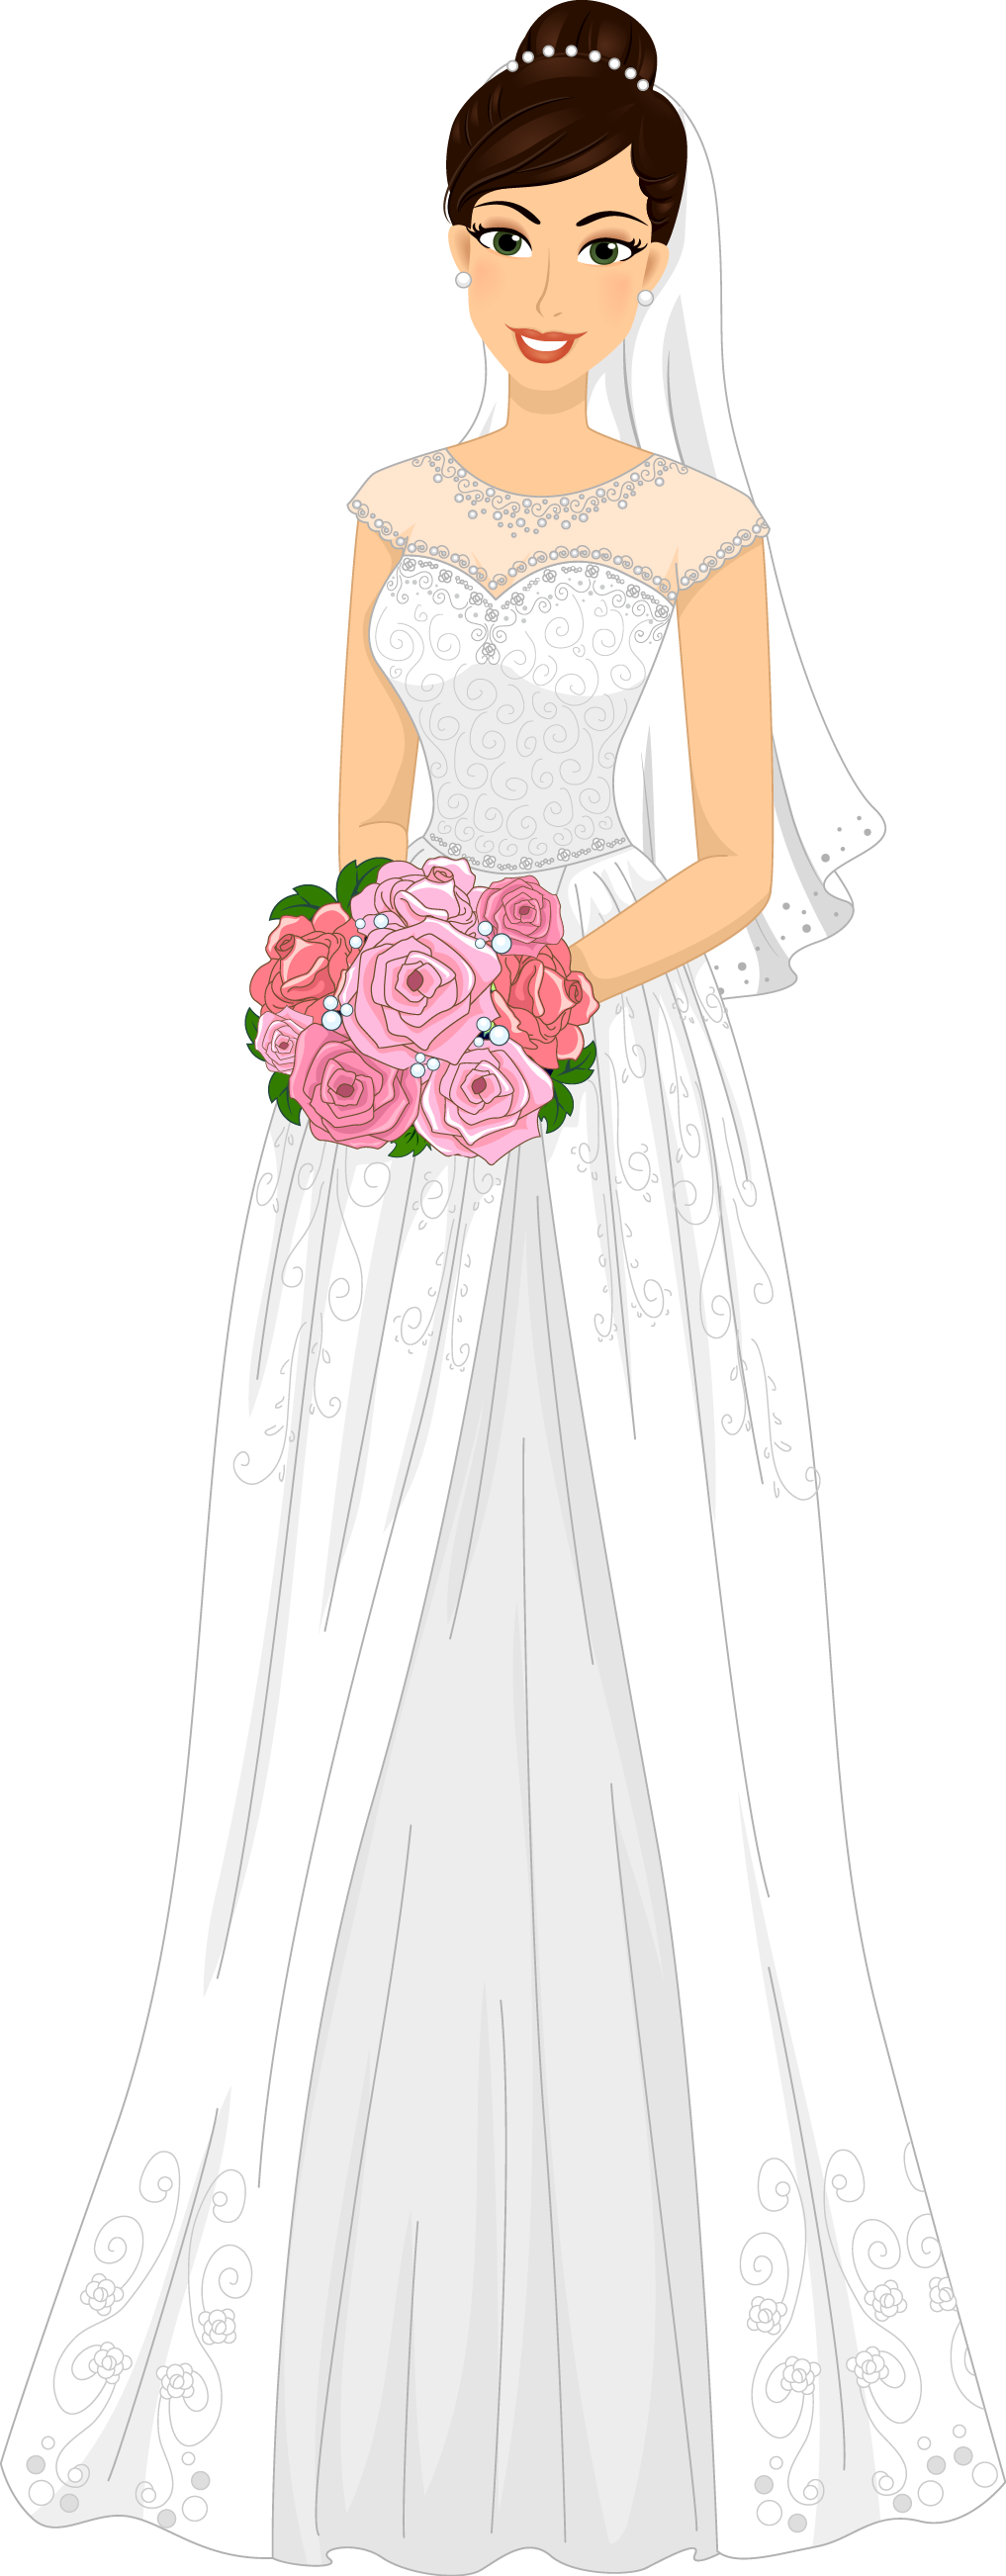 A Cartoon Of A Woman In A Wedding Dress Holding A Bouquet Of Flowers